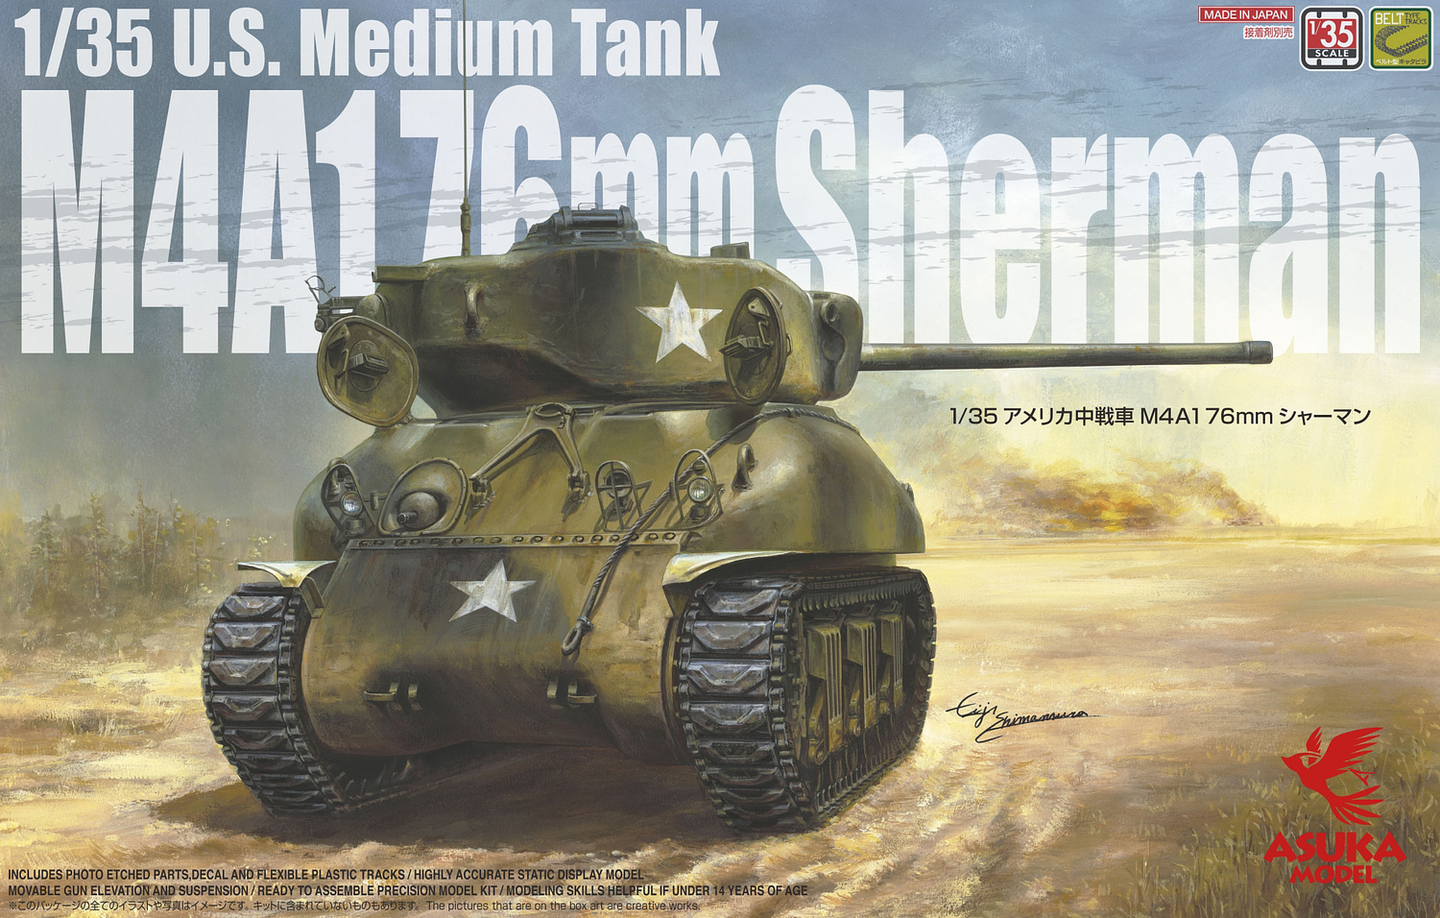 WWII US medium tank M4 Sherman pre-built 1/72 scale plastic